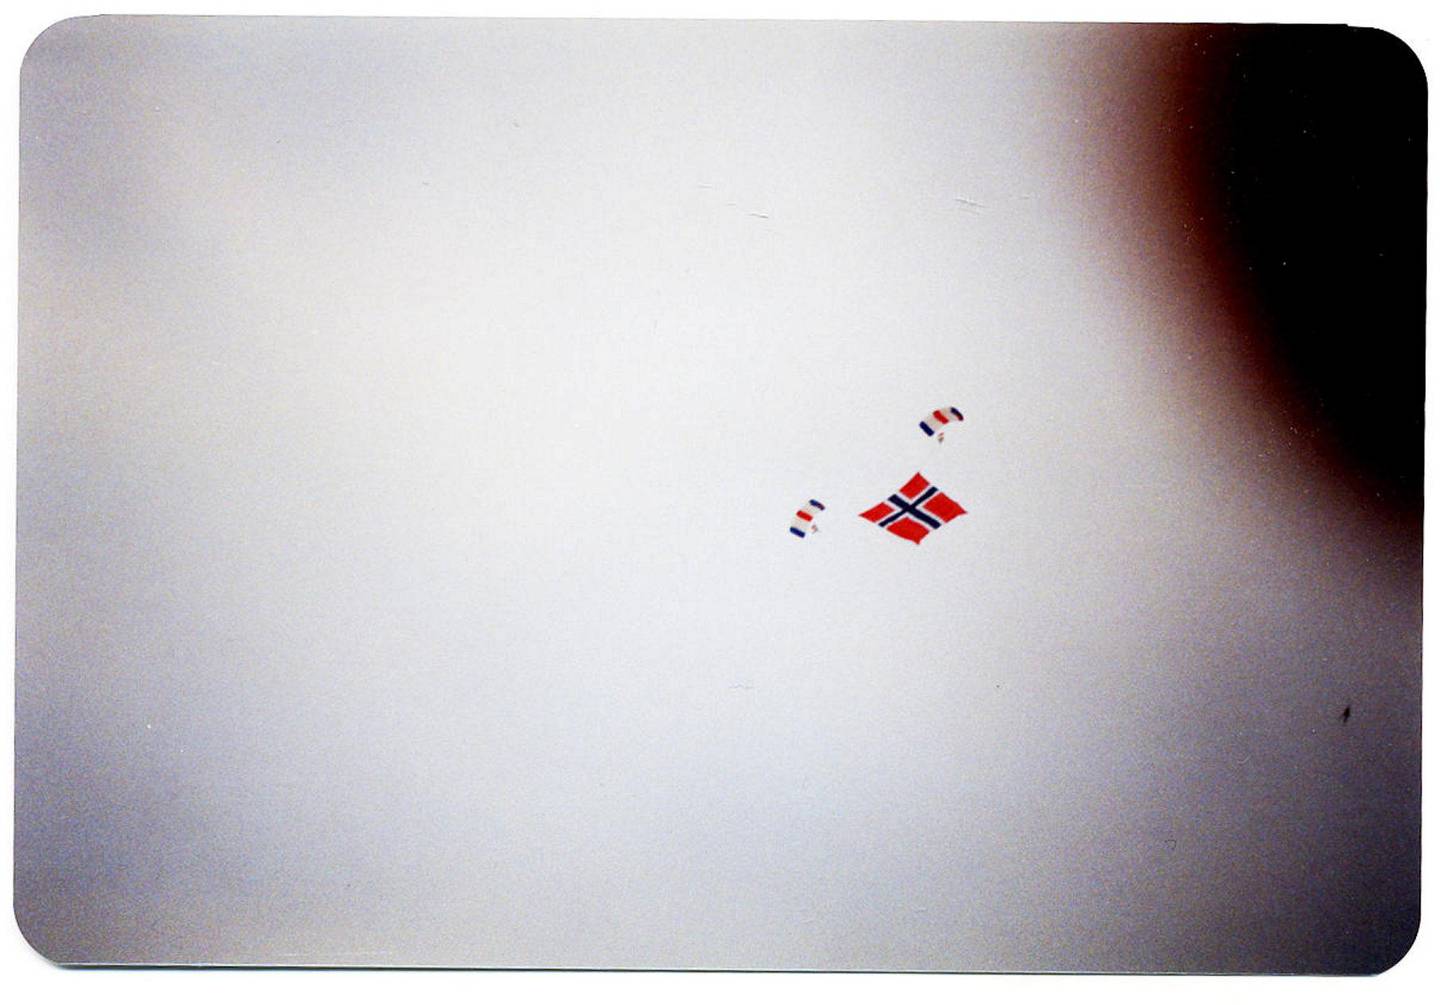 Historisk: Fallskjermhopperne med det norske flagget ankommer åpningsseremonien, foreviget av pappa. Foto: Alfred Unosen